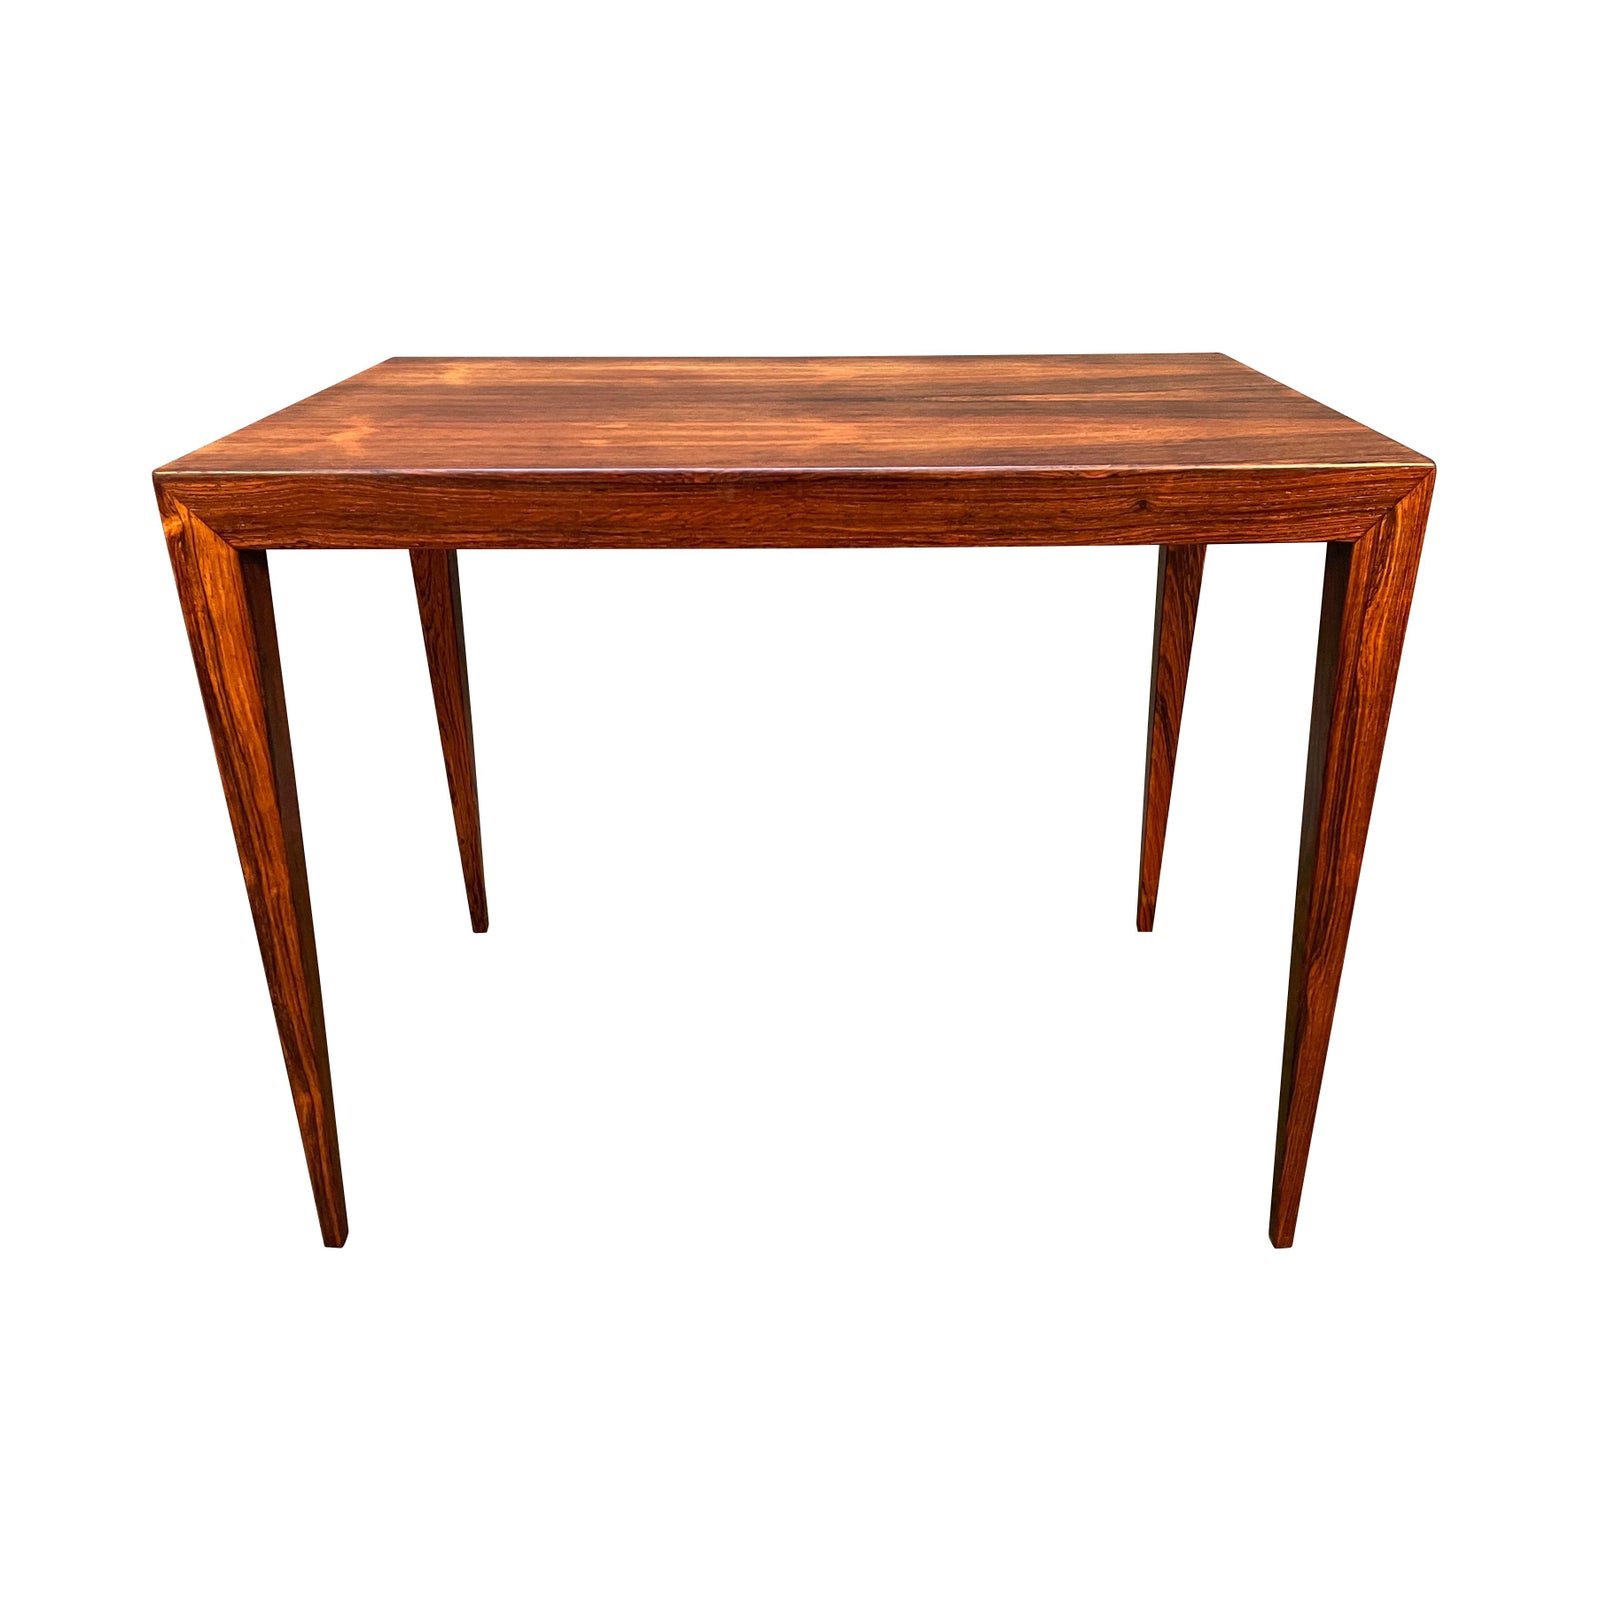 vintage-danish-mid-century-modern-rosewood-end-table-by-severin-hansen-jr-5160.jpeg